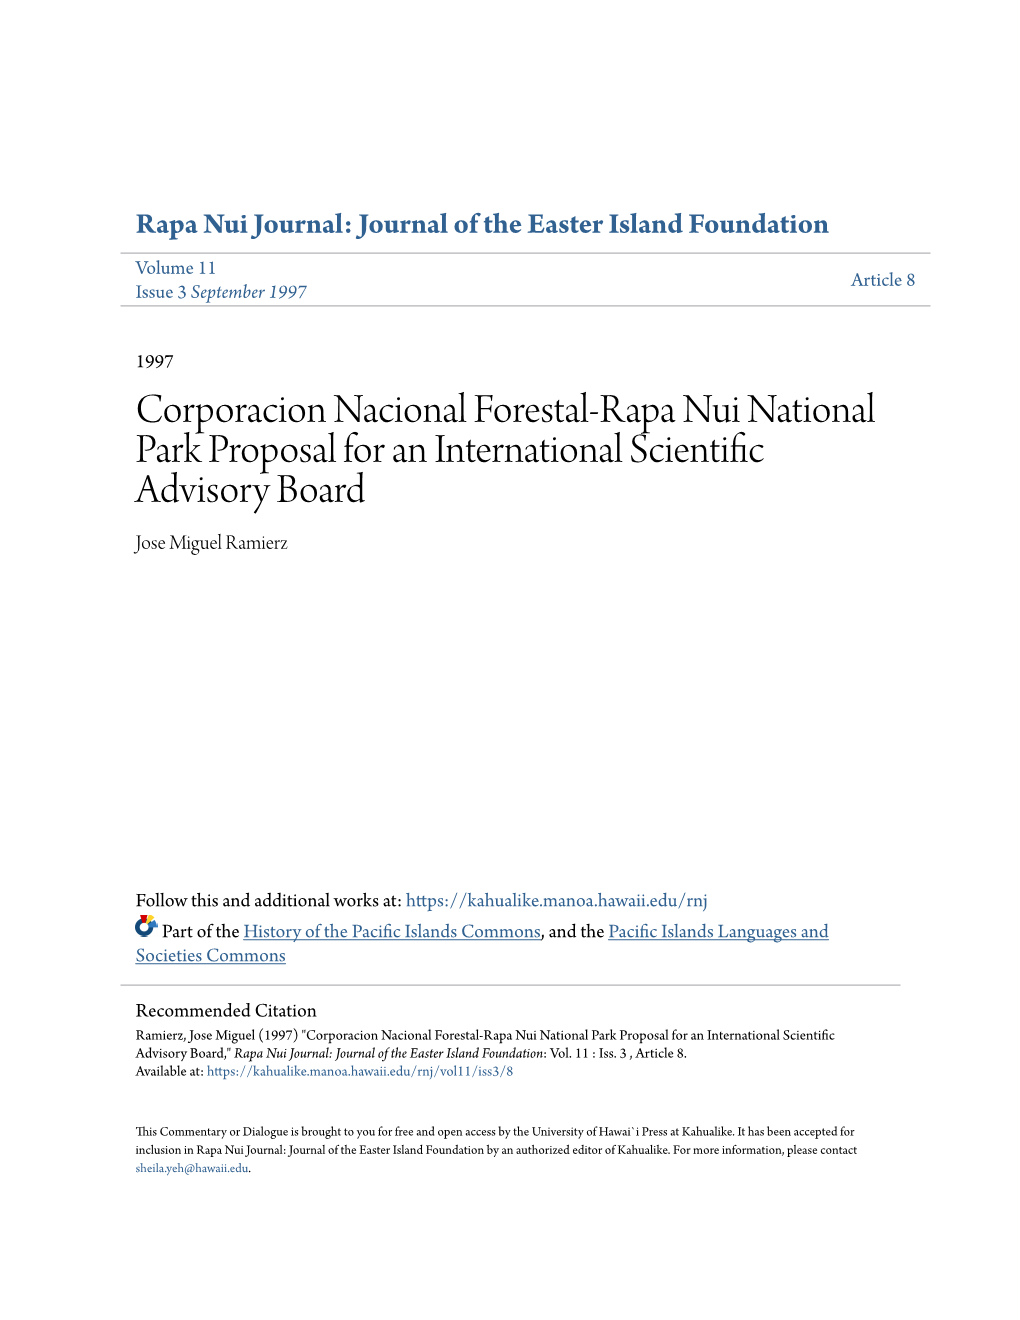 Corporacion Nacional Forestal-Rapa Nui National Park Proposal for an International Scientific Advisory Board Jose Miguel Ramierz